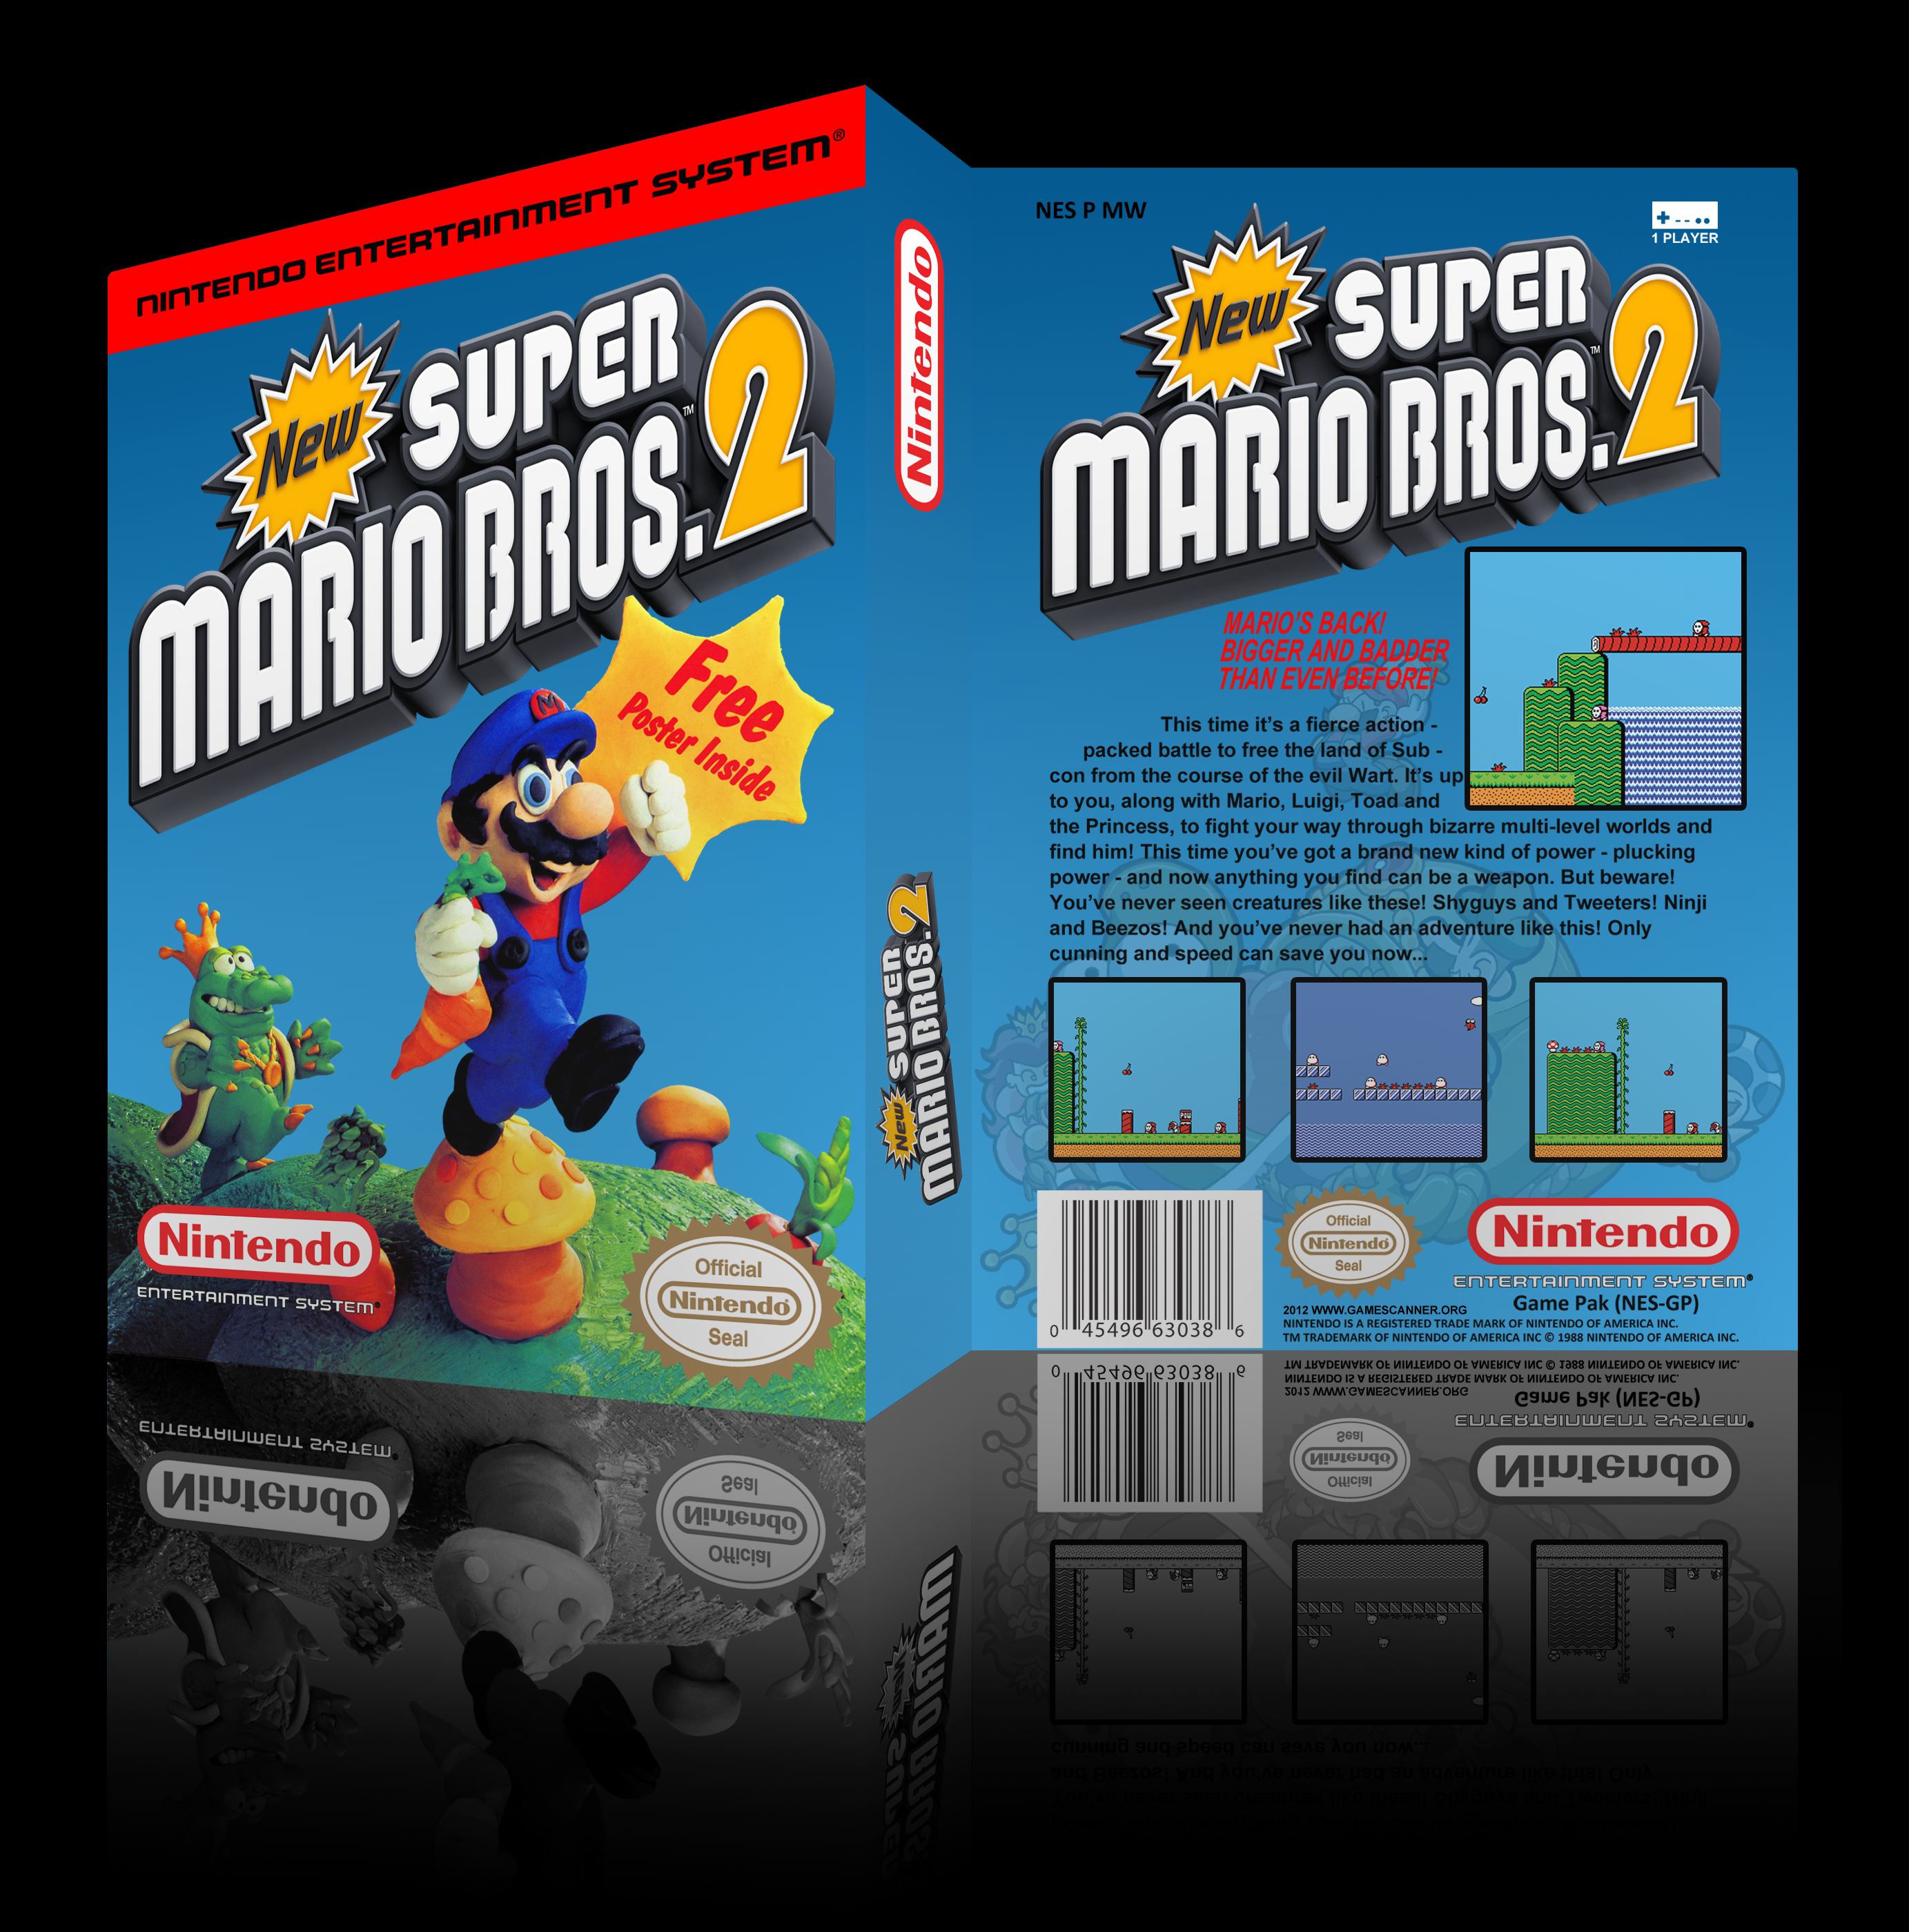 Super Mario Bros 2 NES Box Art Cover by GameScanner.org